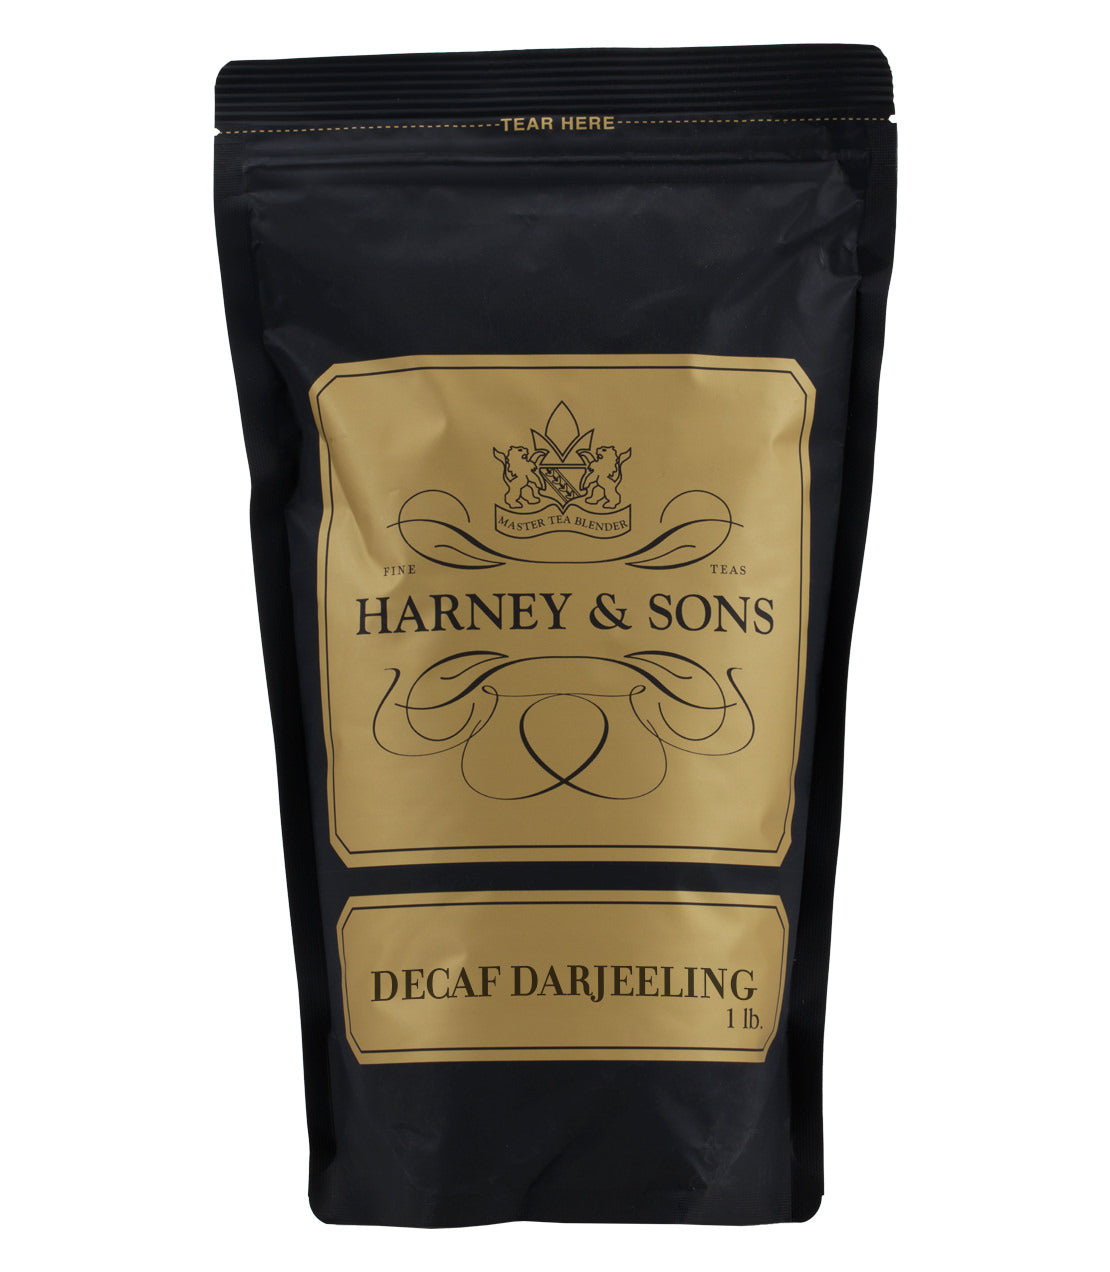 Decaf Darjeeling - Loose 1 lb. Bag - Harney & Sons Fine Teas